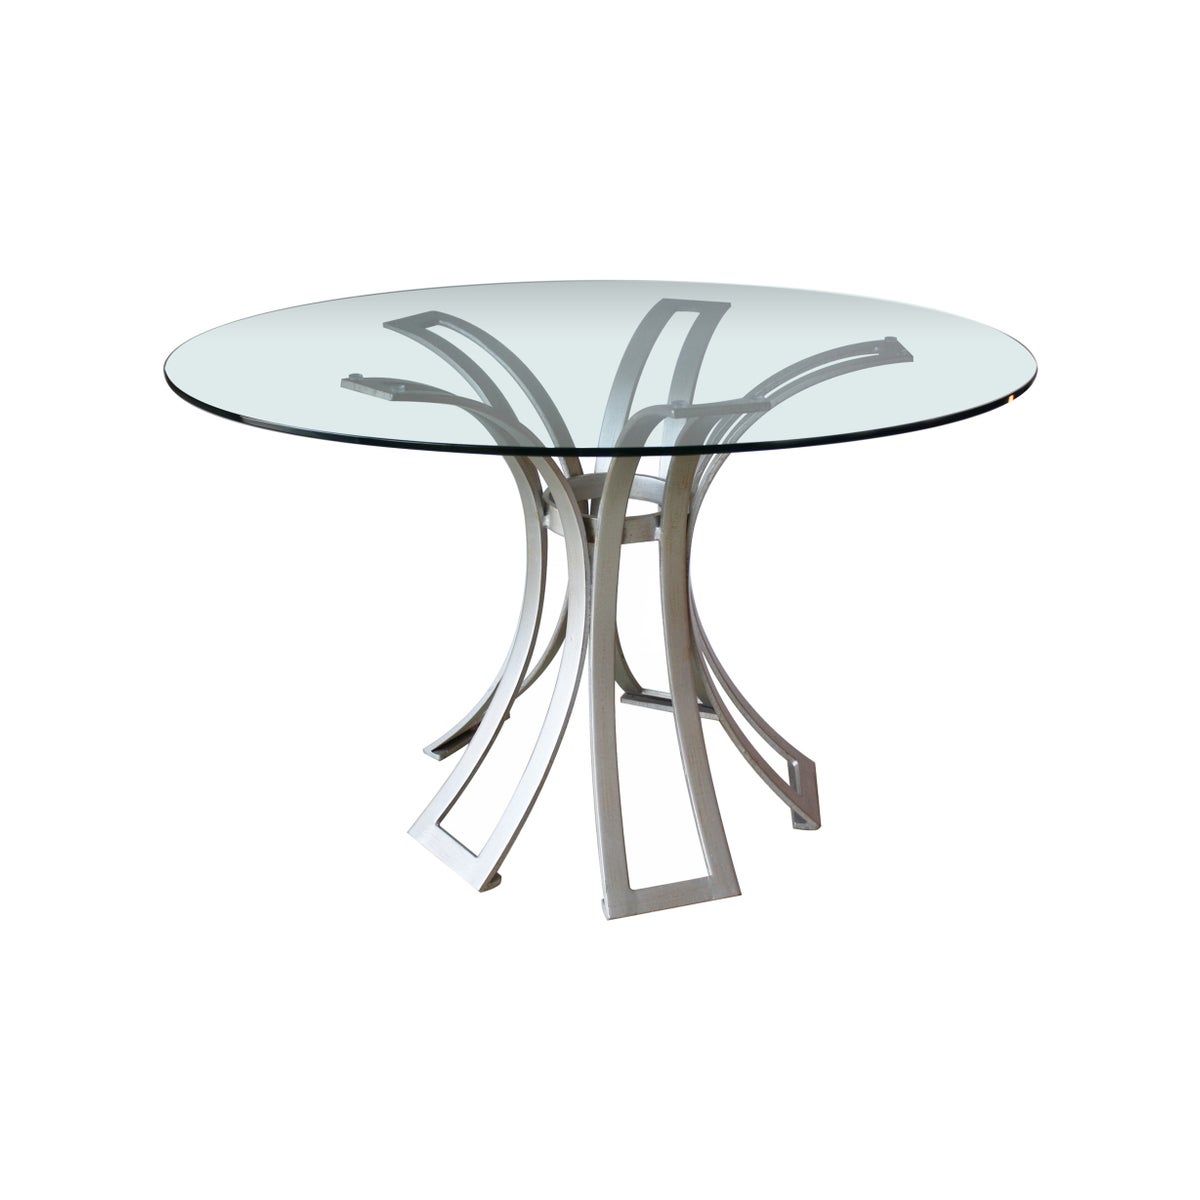 Klismos Dining Table Base in Silver